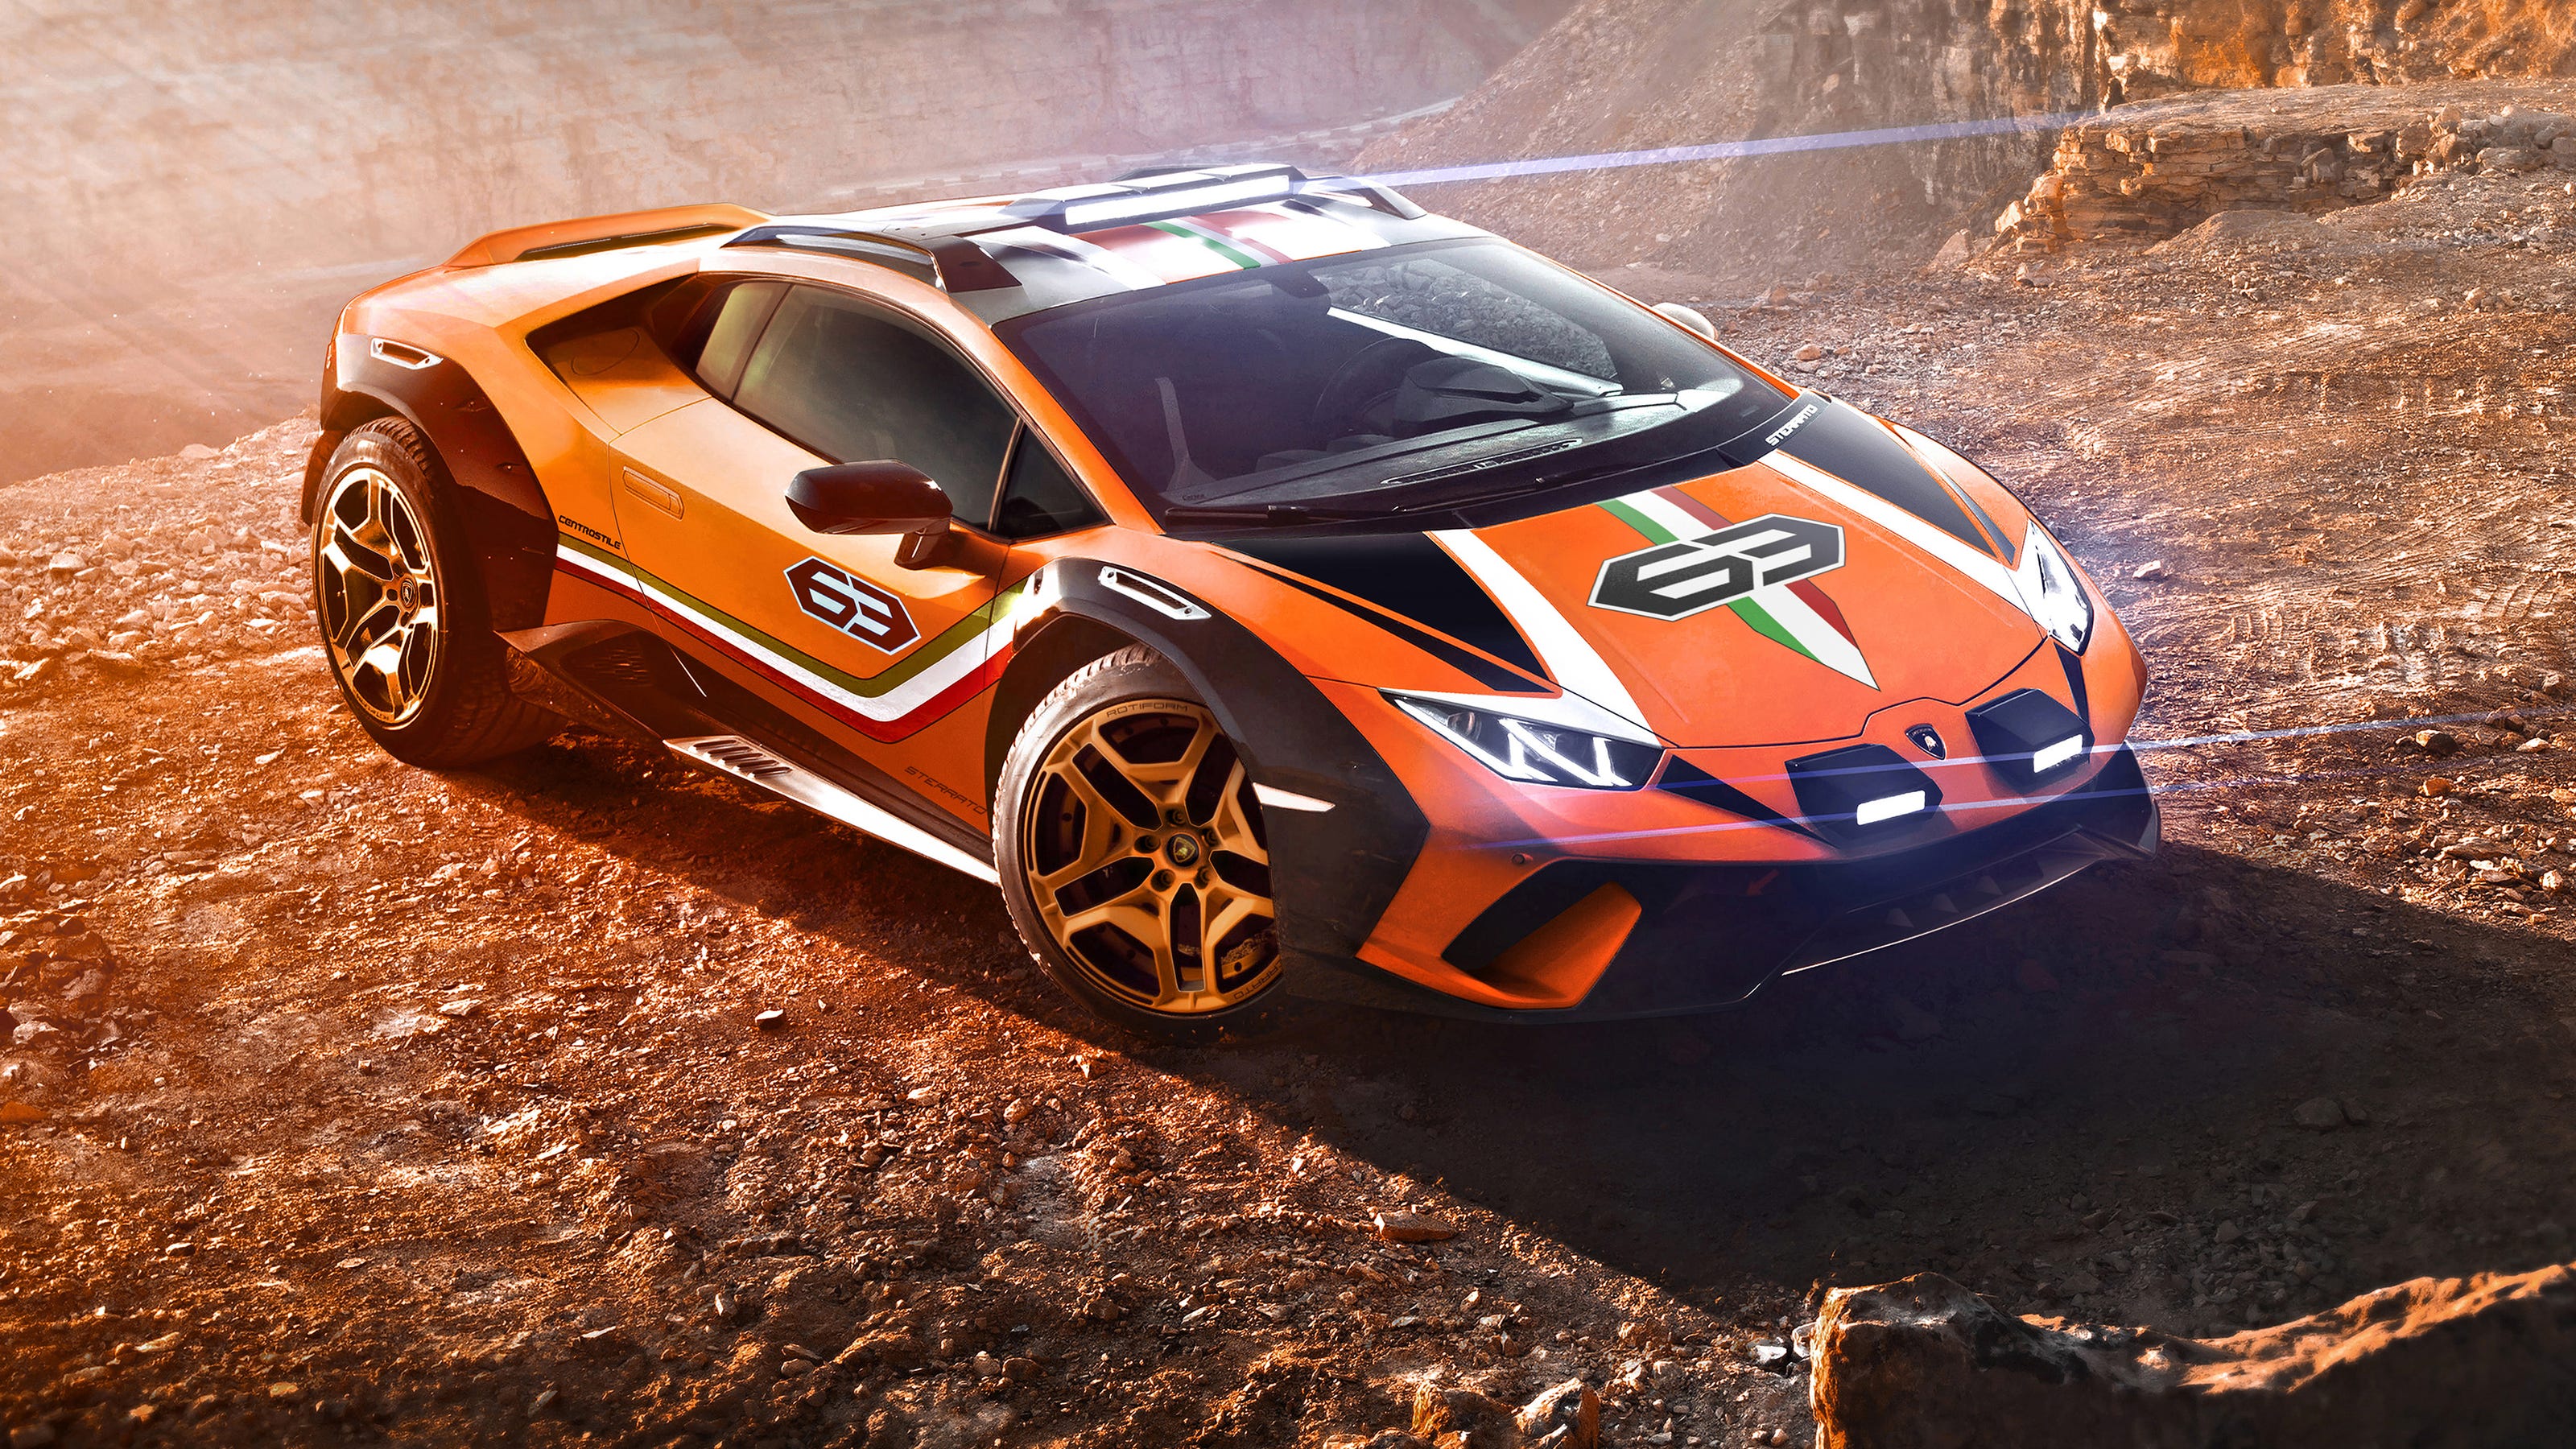 An Off Road Lamborghini Meet The Huracán Sterrato Concept